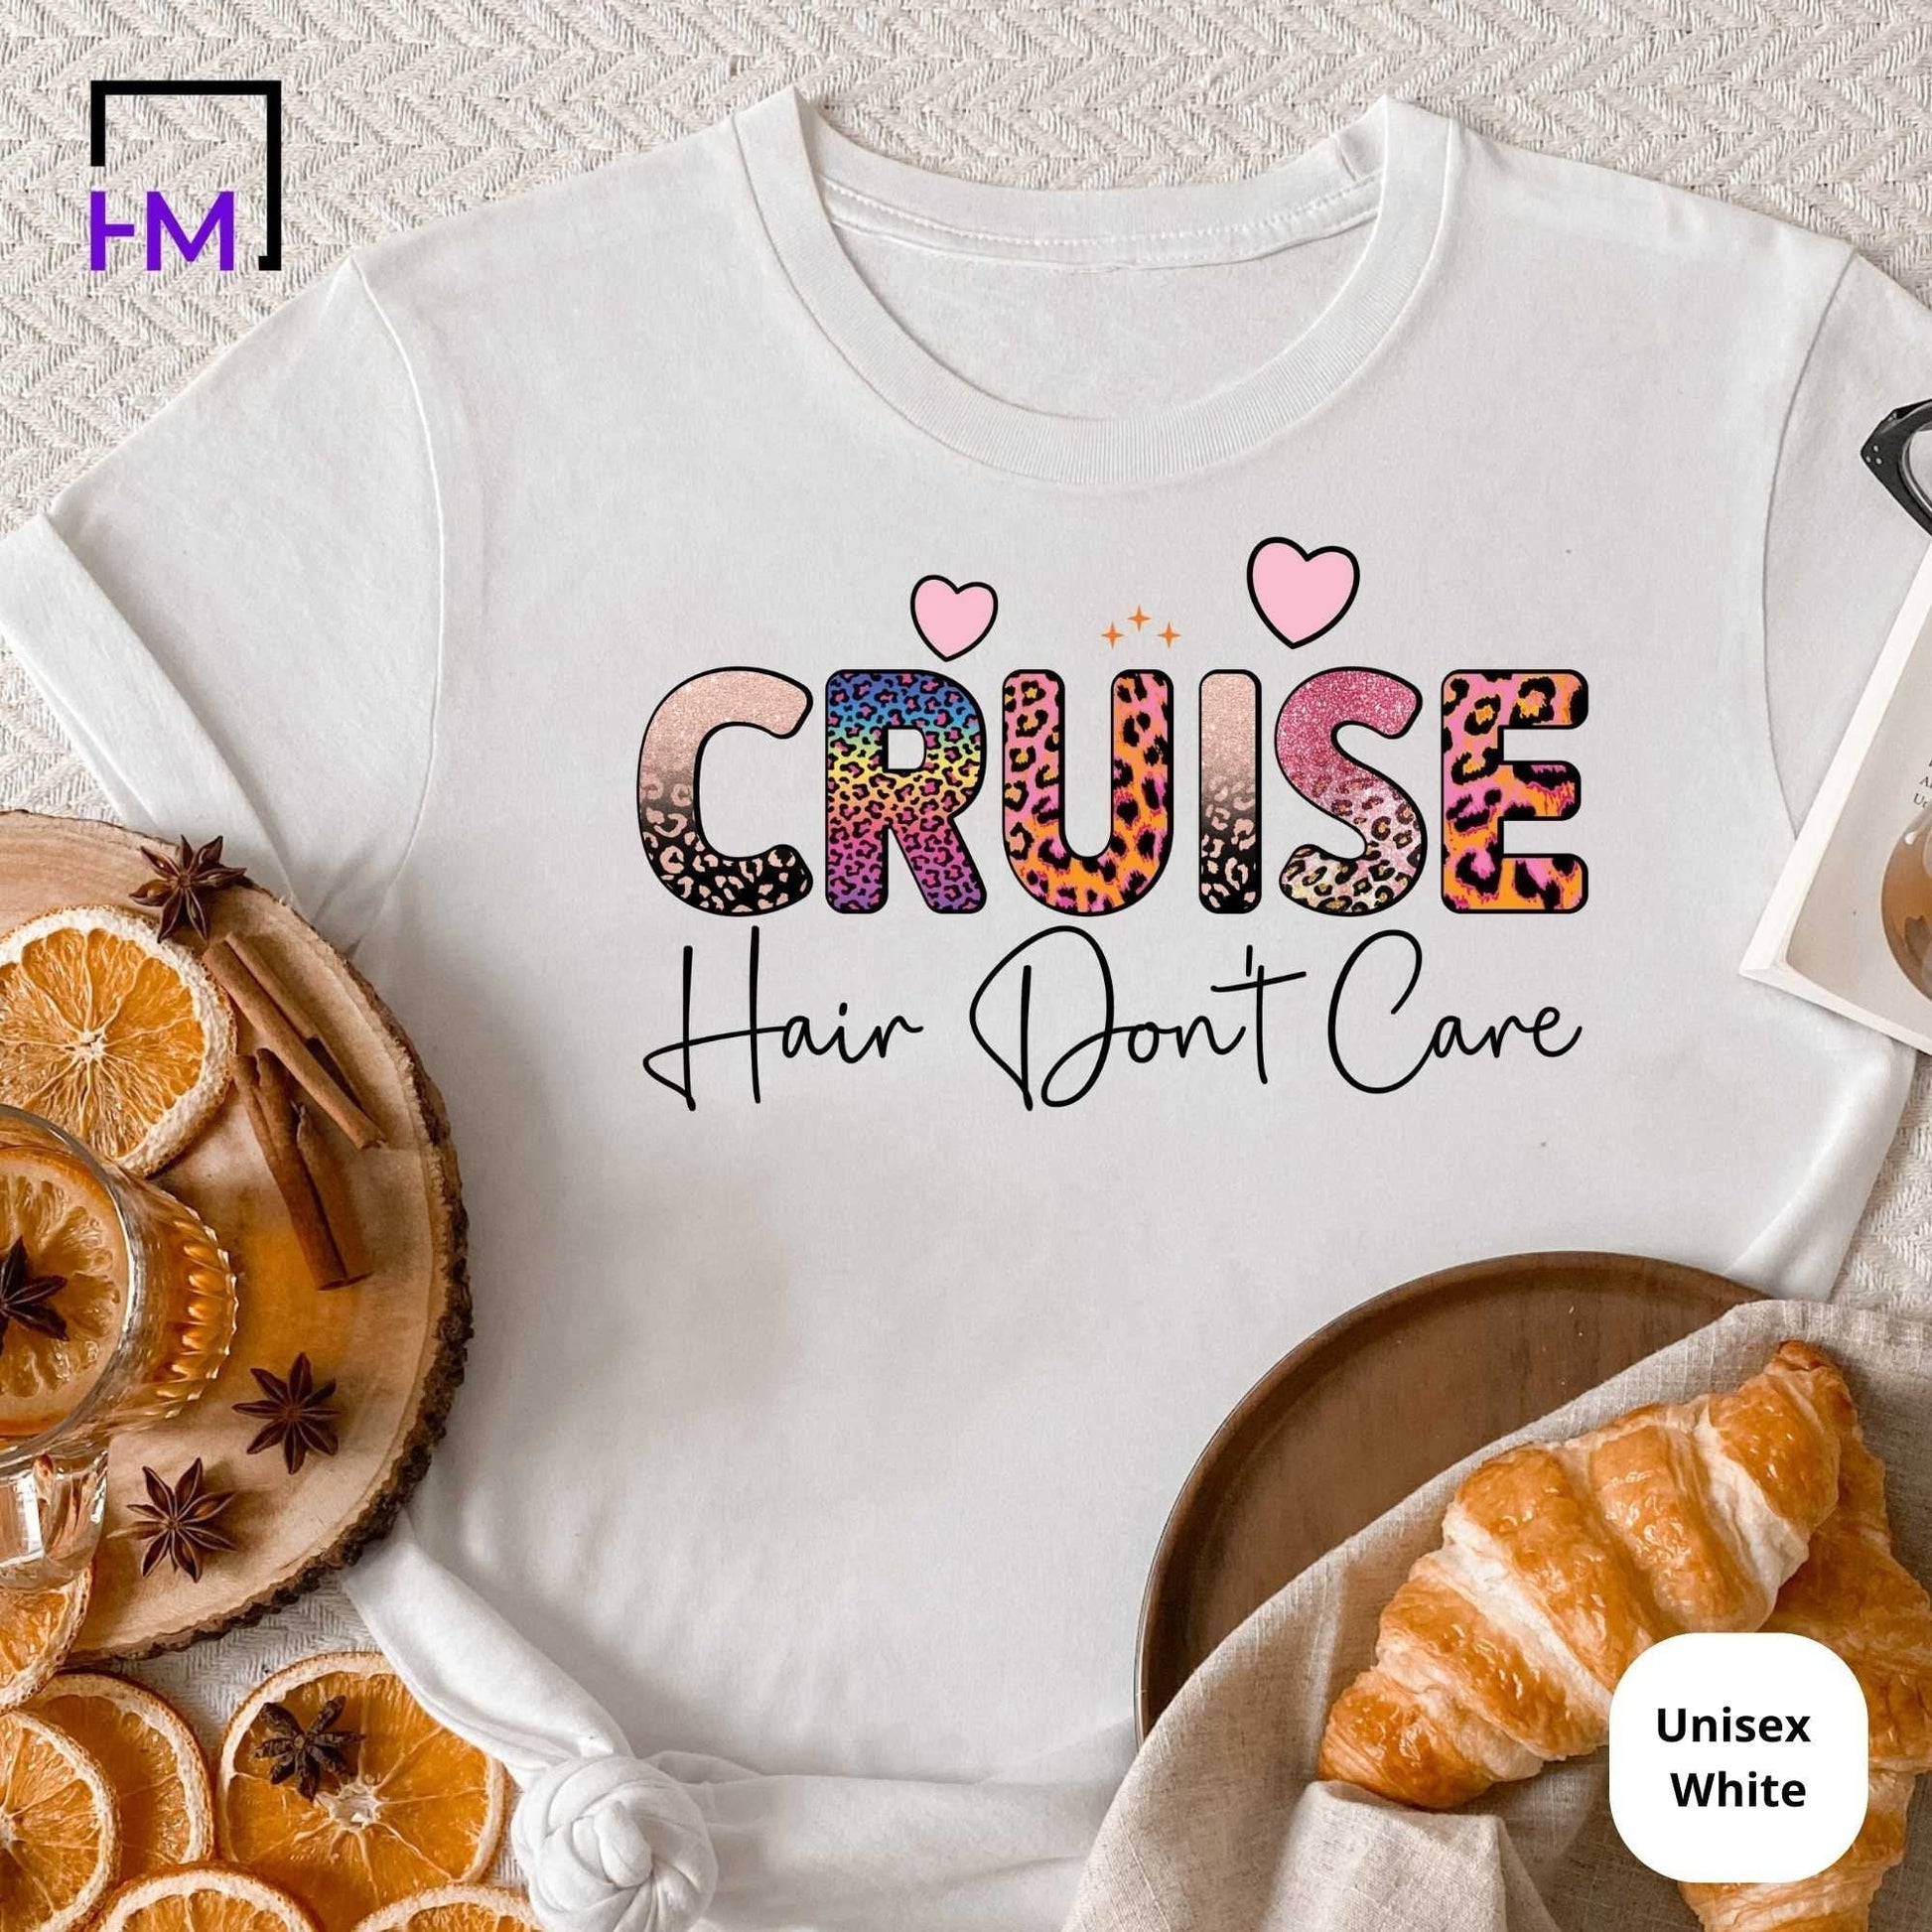 Cruise Hair Don?t Care, Animal Print Cruise Shirts for Girls Trip HMDesignStudioUS